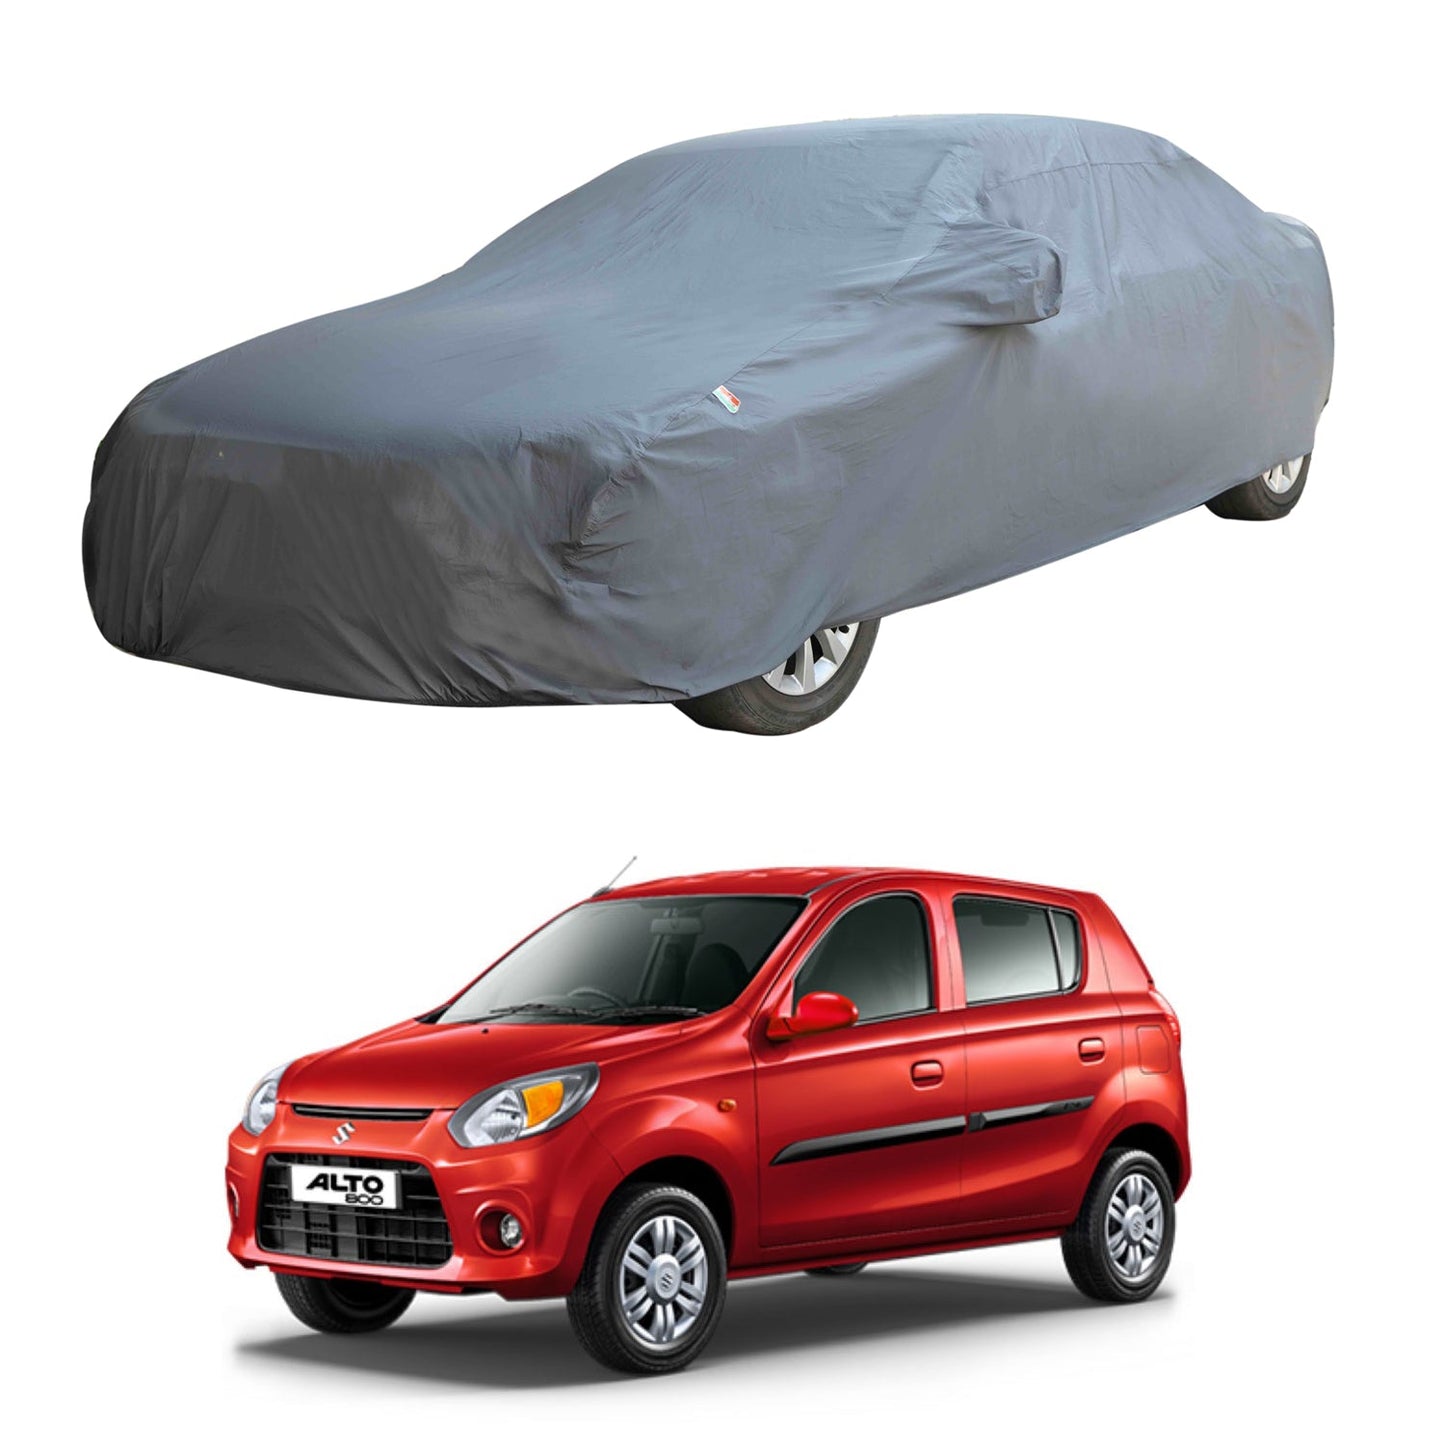 Oshotto Dark Grey 100% Anti Reflective, dustproof and Water Proof Car Body Cover with Mirror Pockets For Maruti Suzuki Alto 800